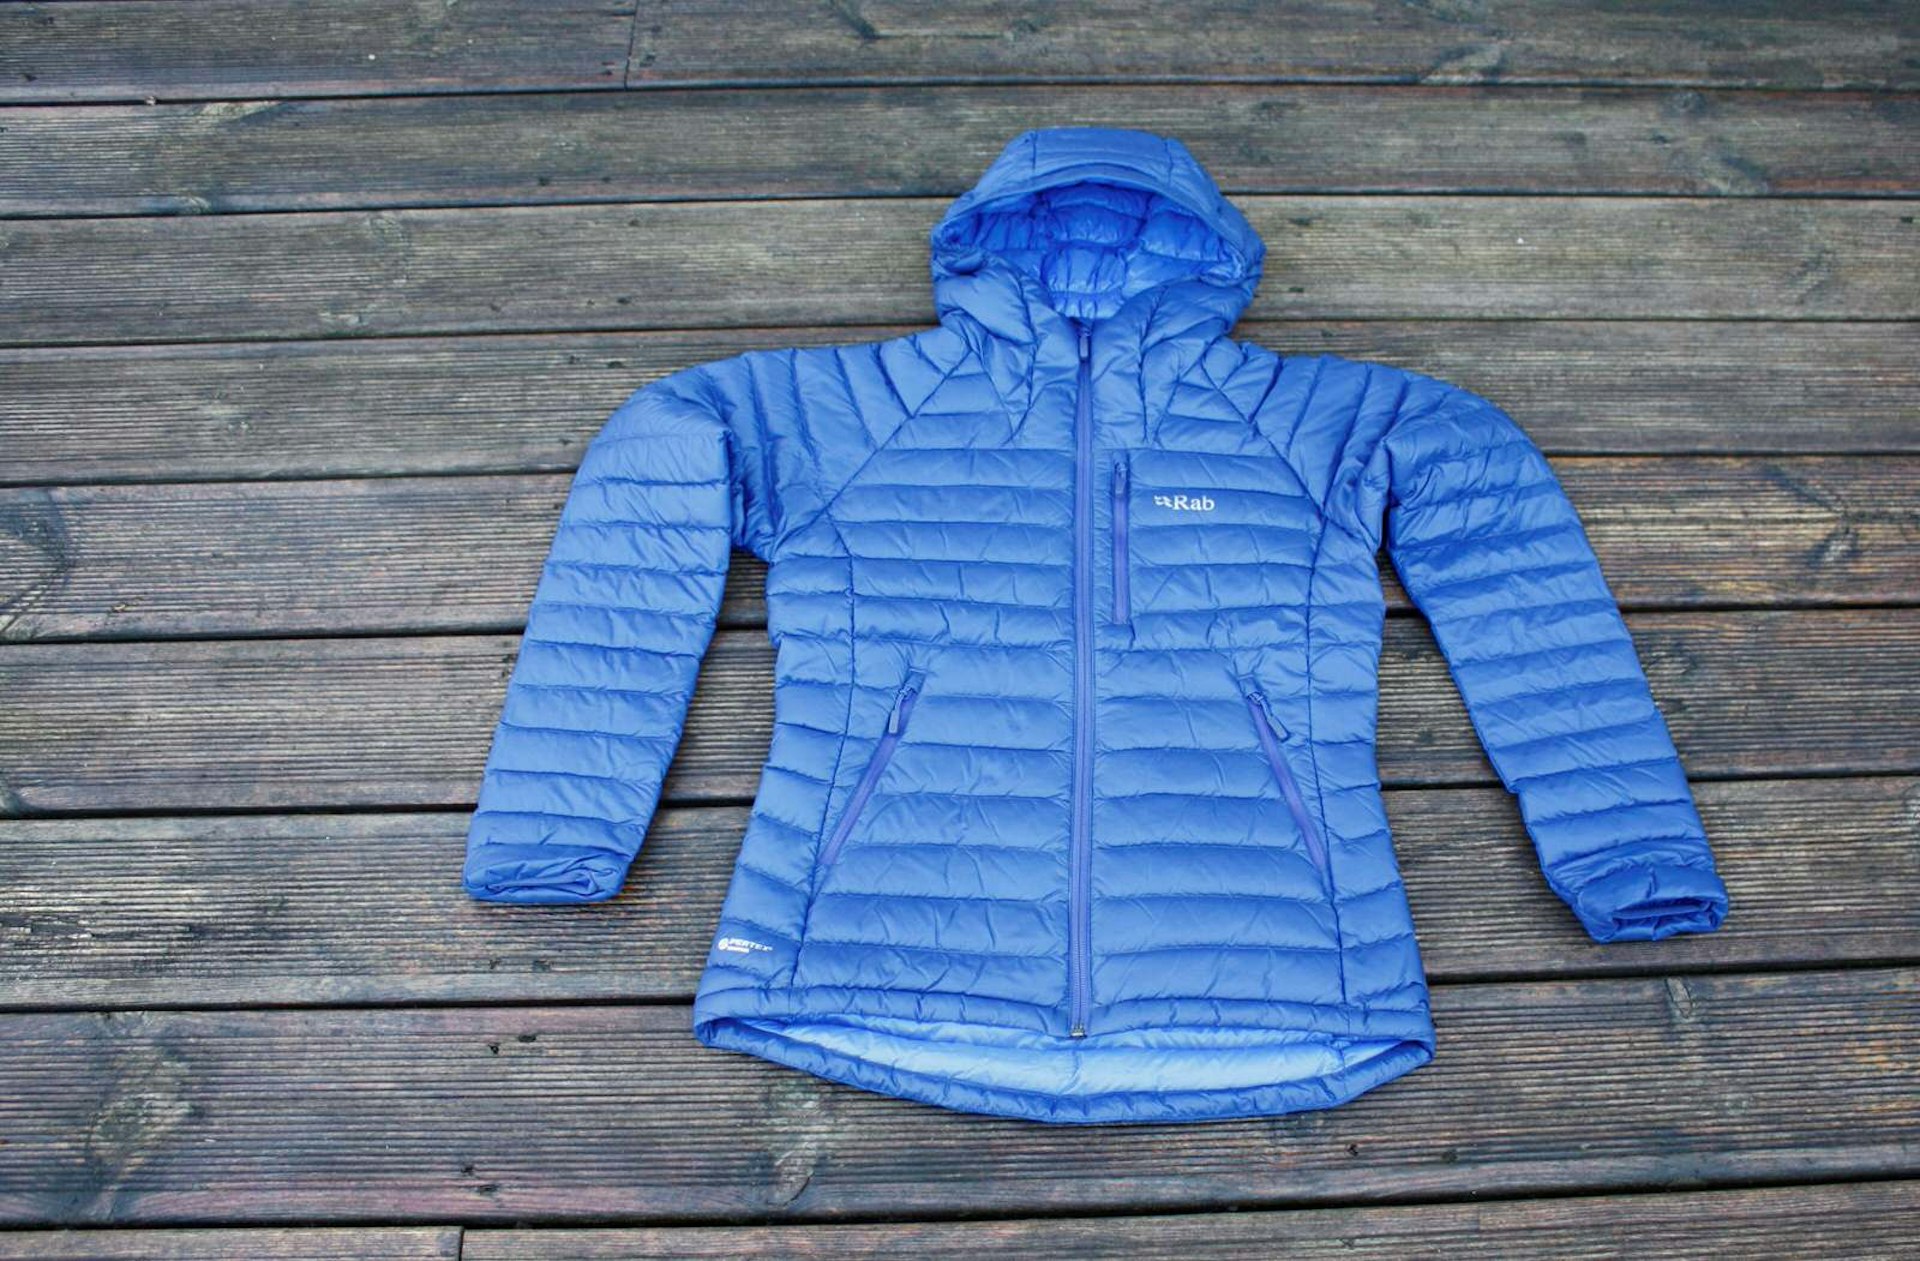 The Rab Microlight Alpine Jacket in blue